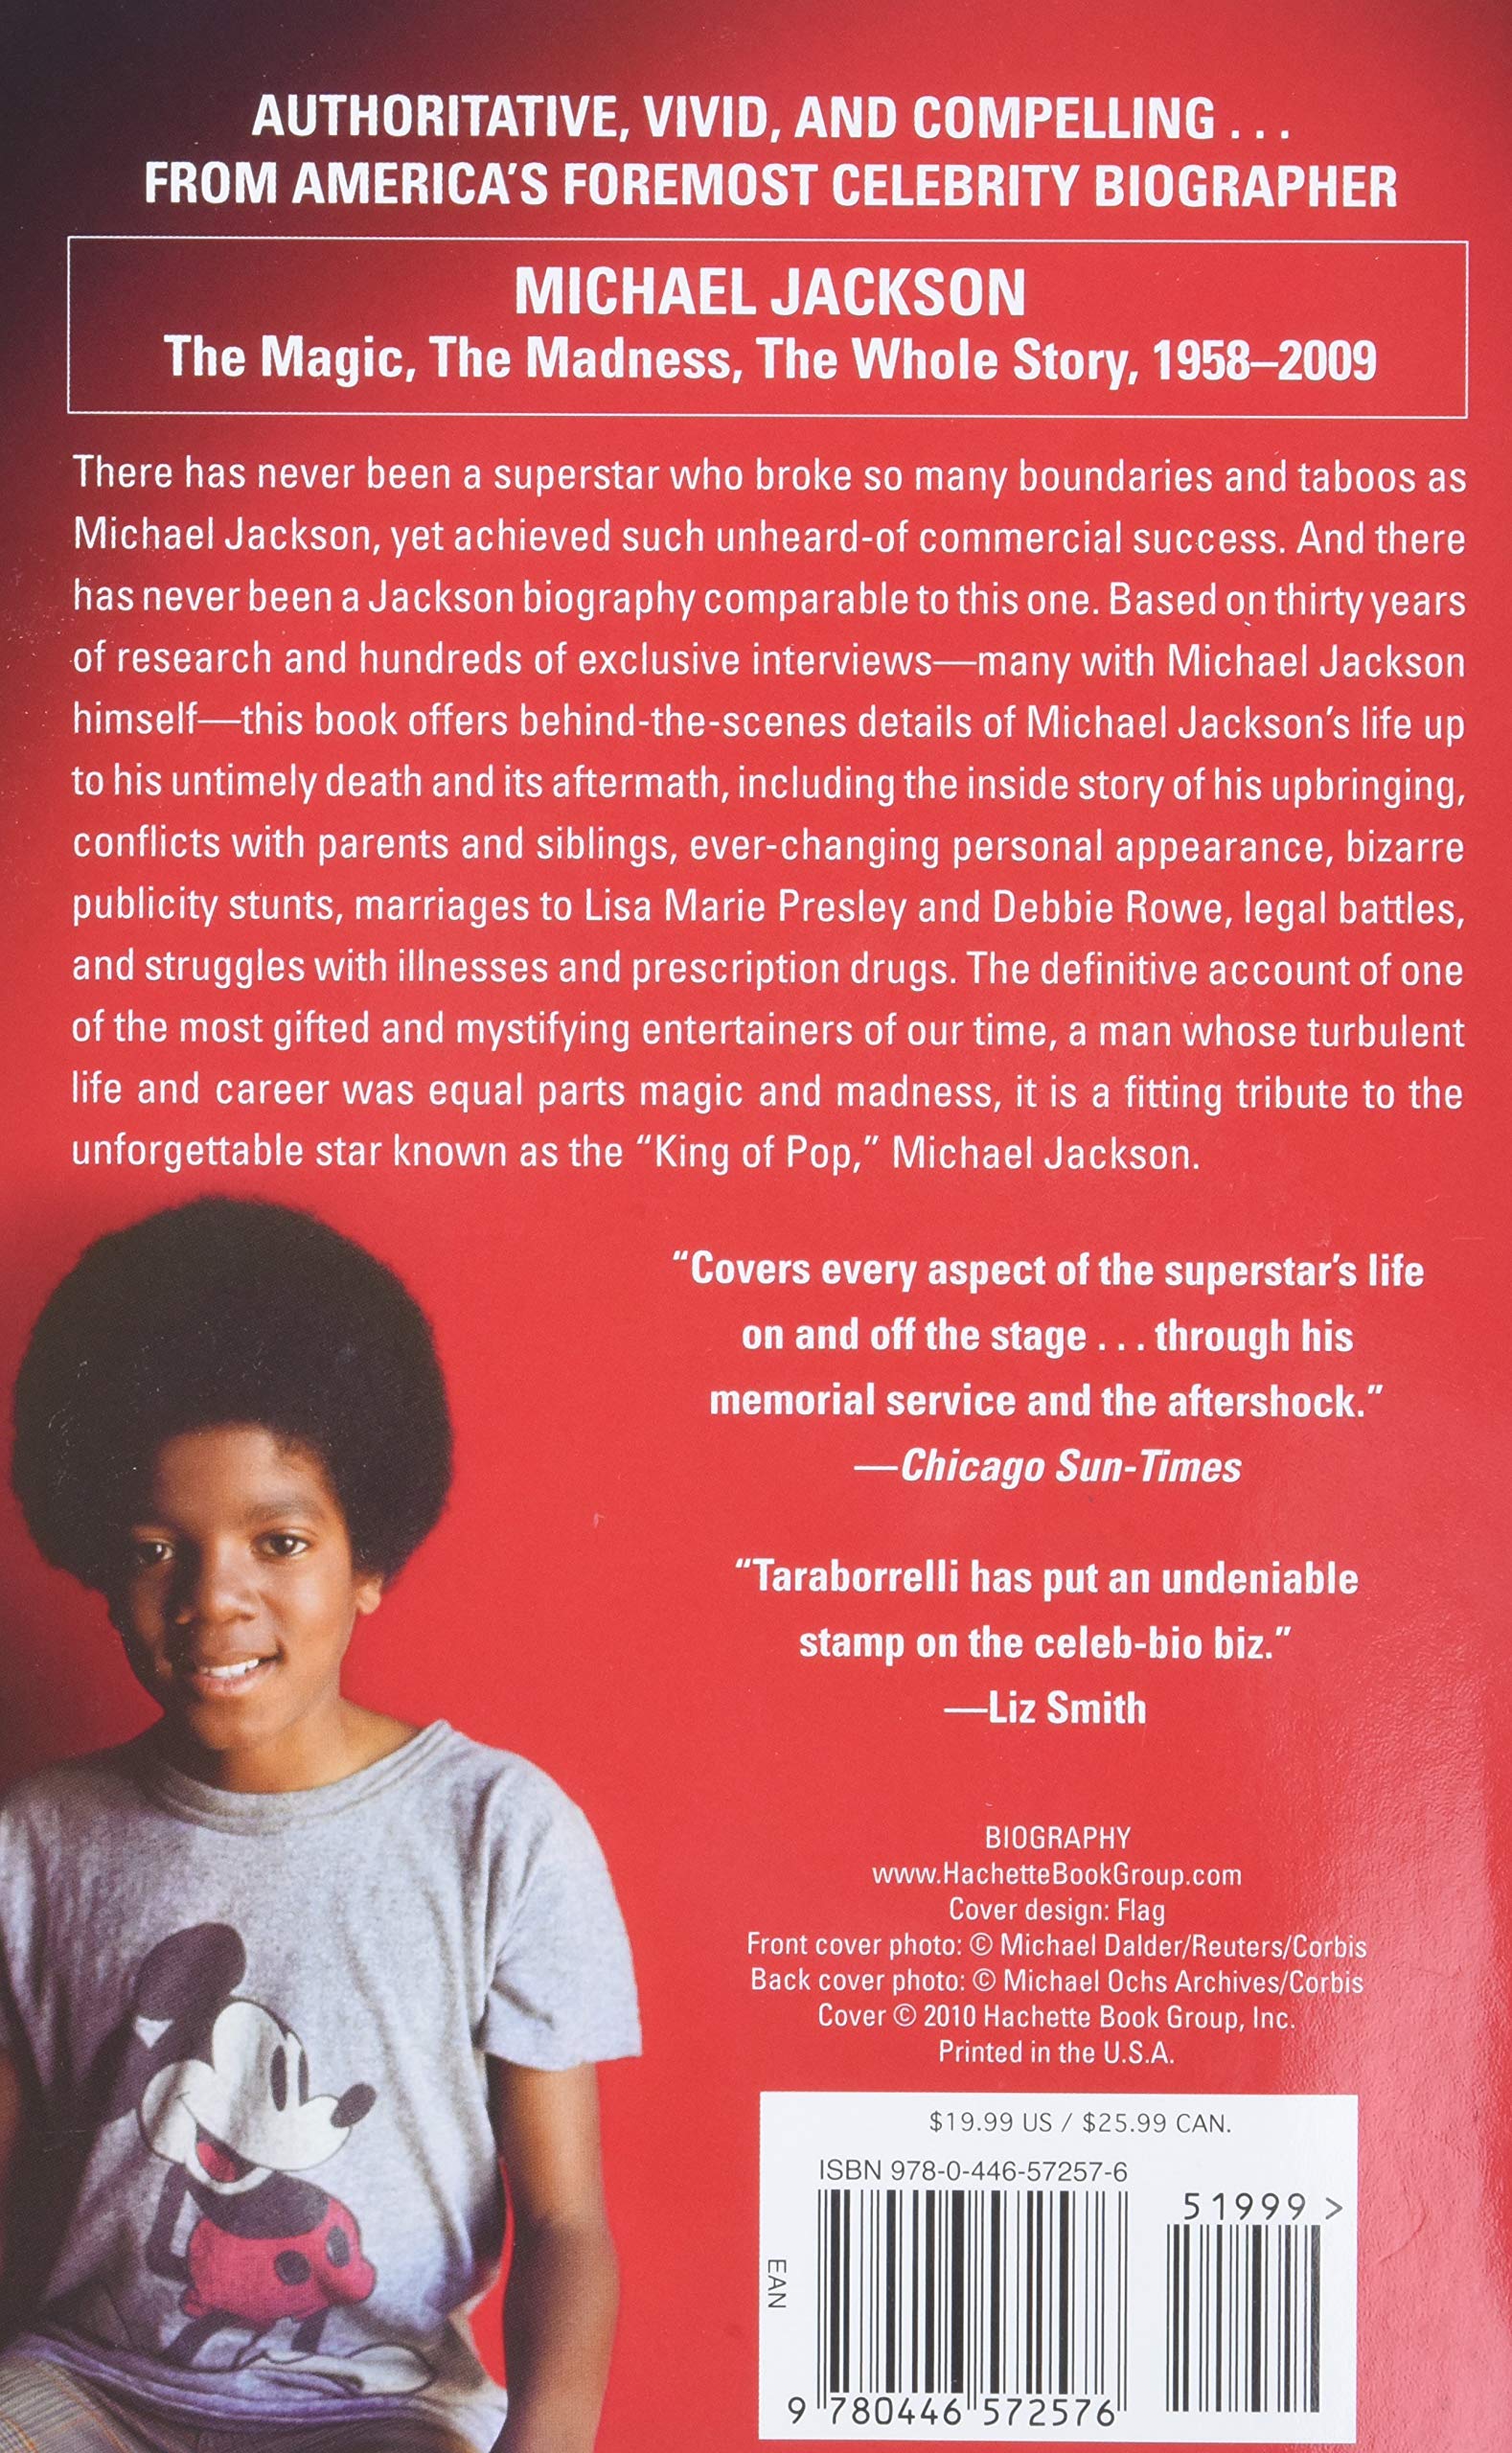 Michael Jackson: The Magic, The Madness, The Whole Story (1958-2009) (J. Randy Taraborrelli)